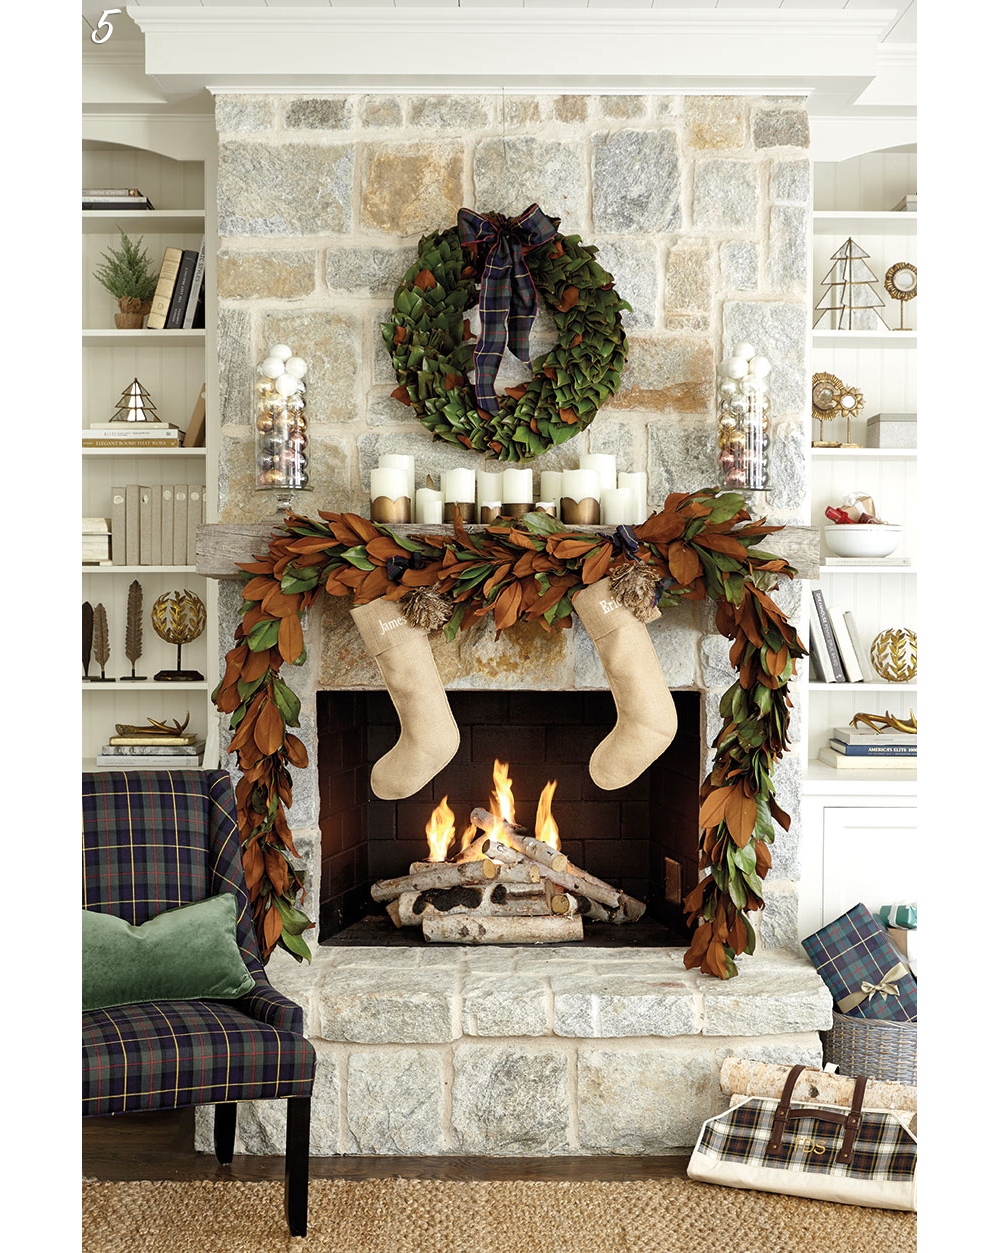 Fireplace mantel holiday decor